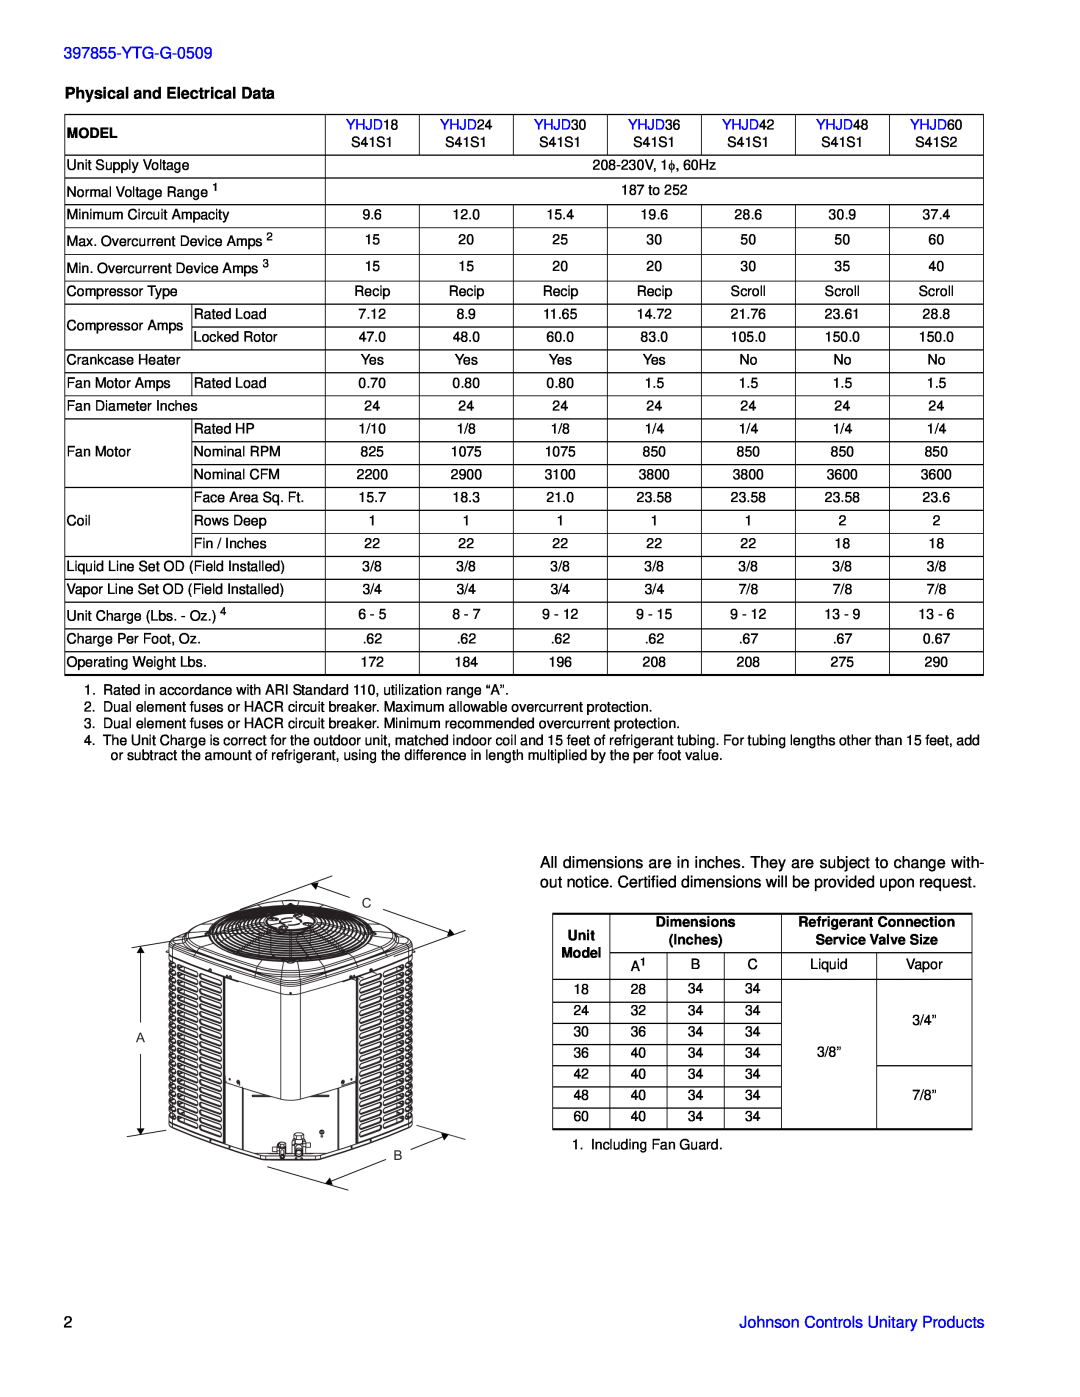 York YHJD18 warranty Physical and Electrical Data, YTG-G-0509 